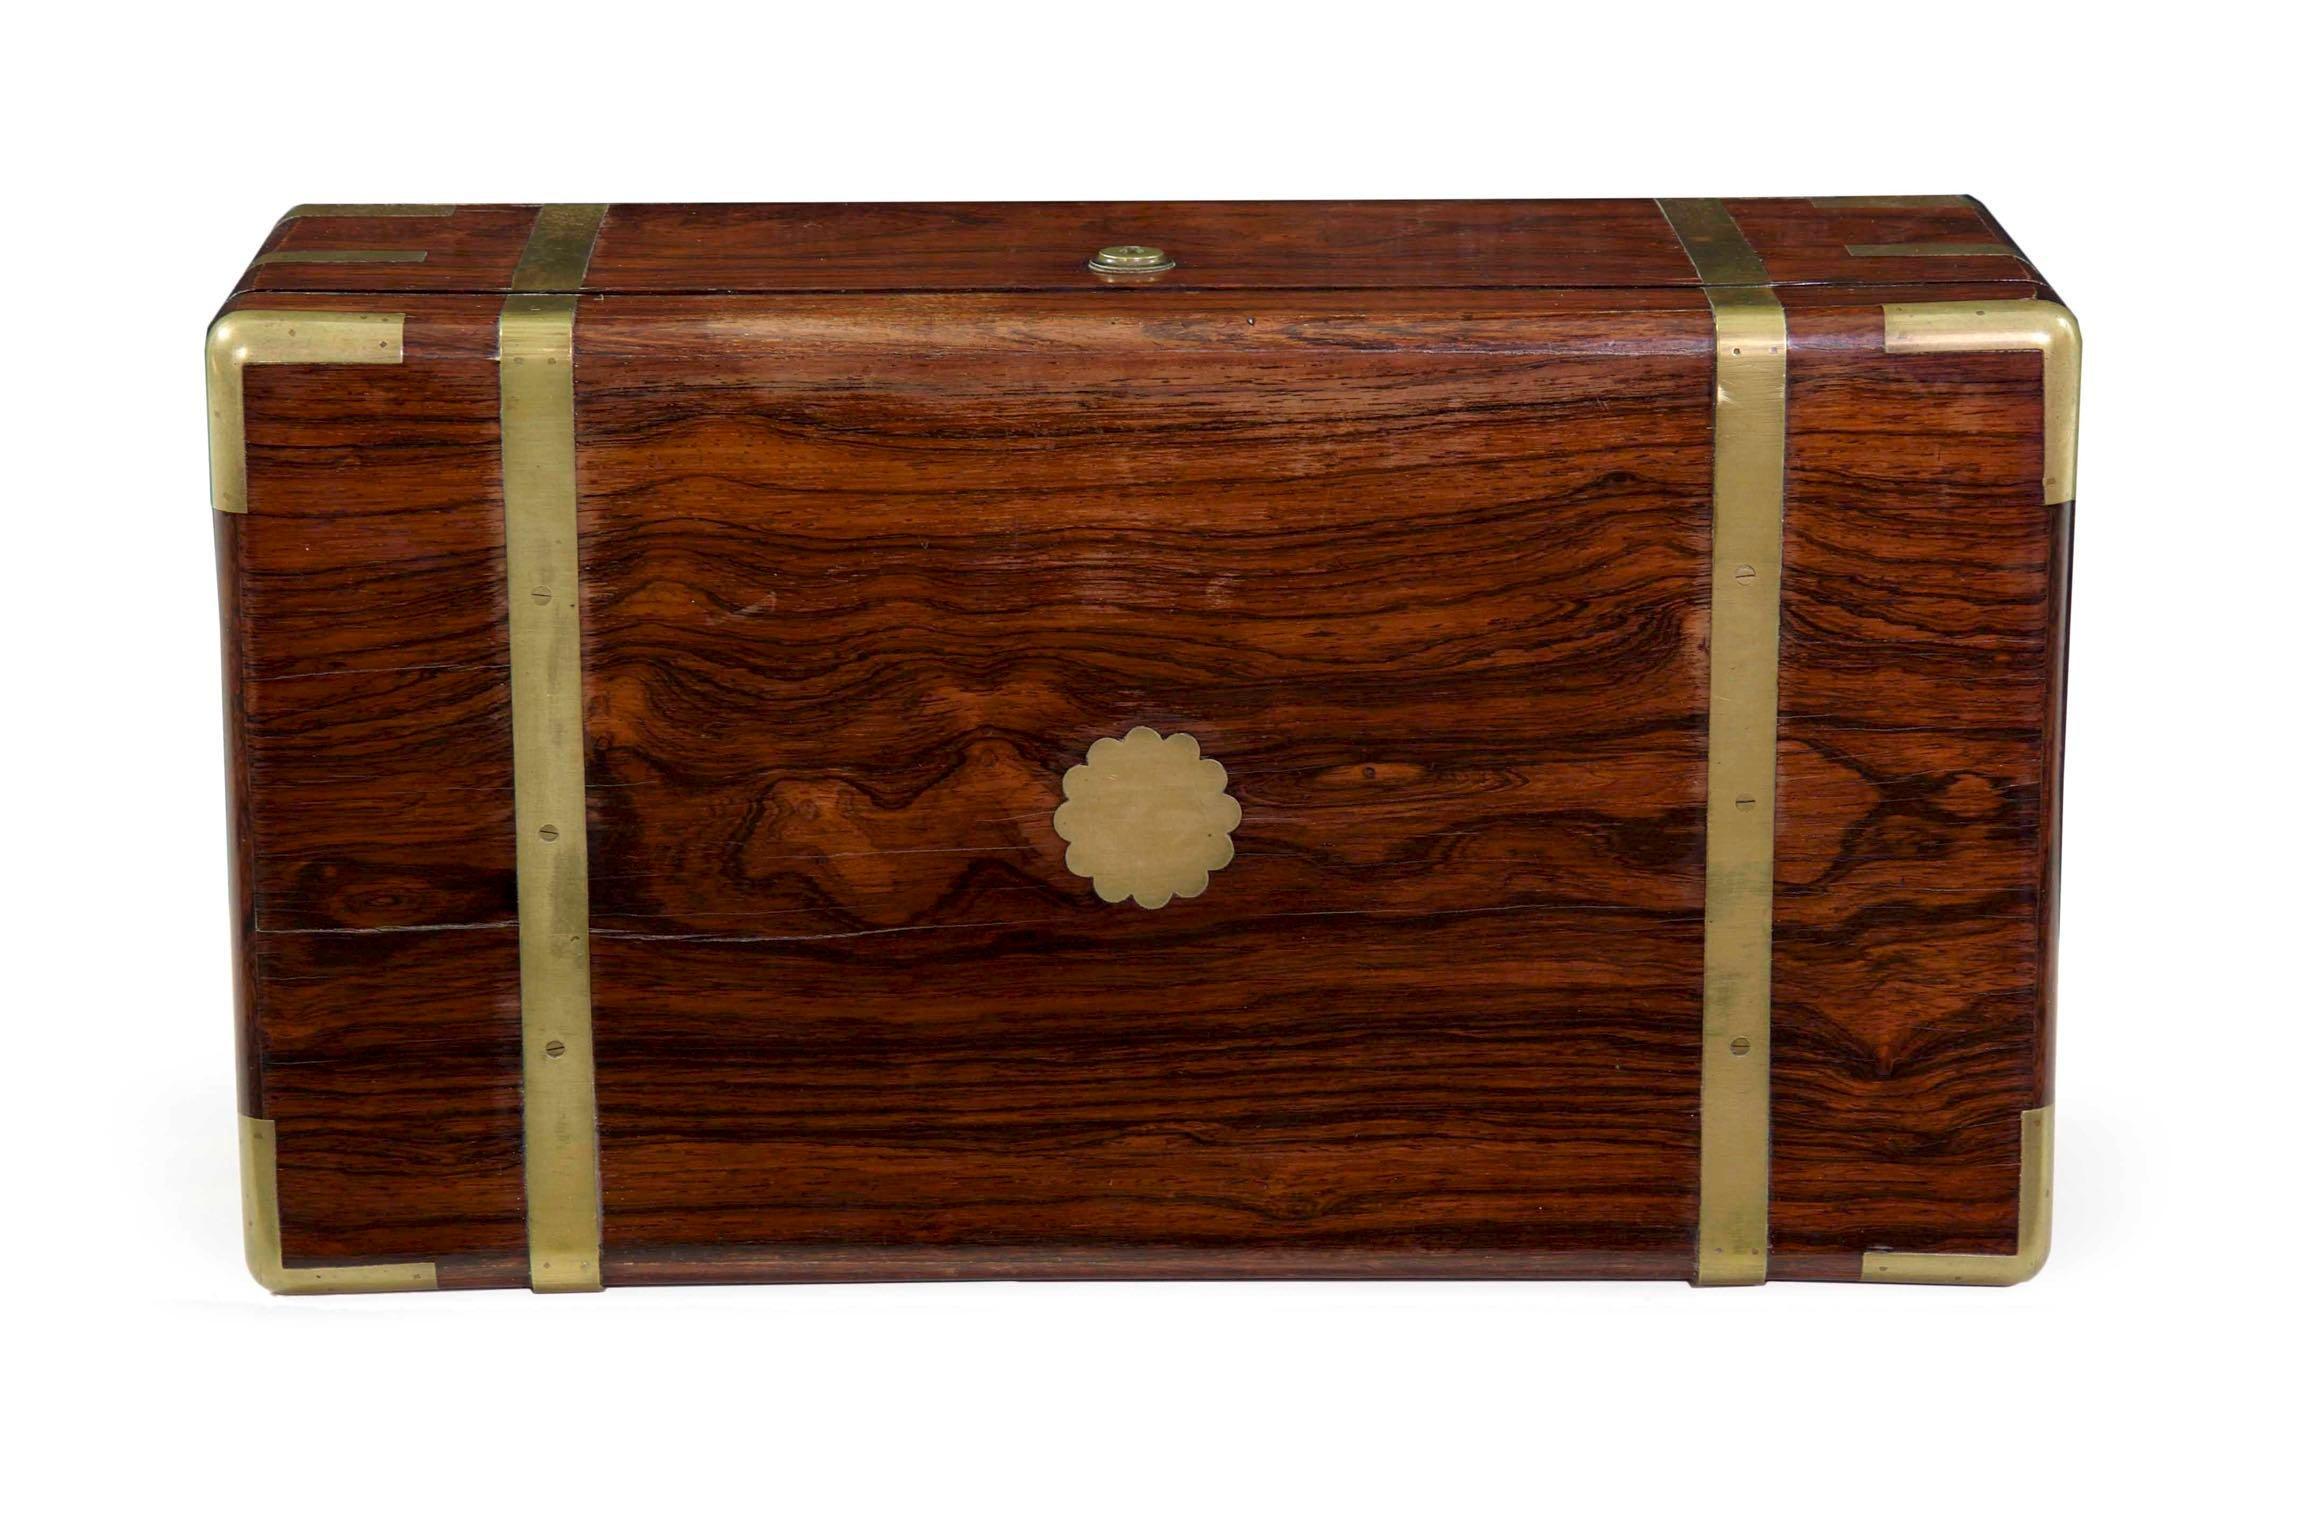 Rare Antique English Regency Rosewood & Brass Writing Slope Box Lap Desk For Sale 4